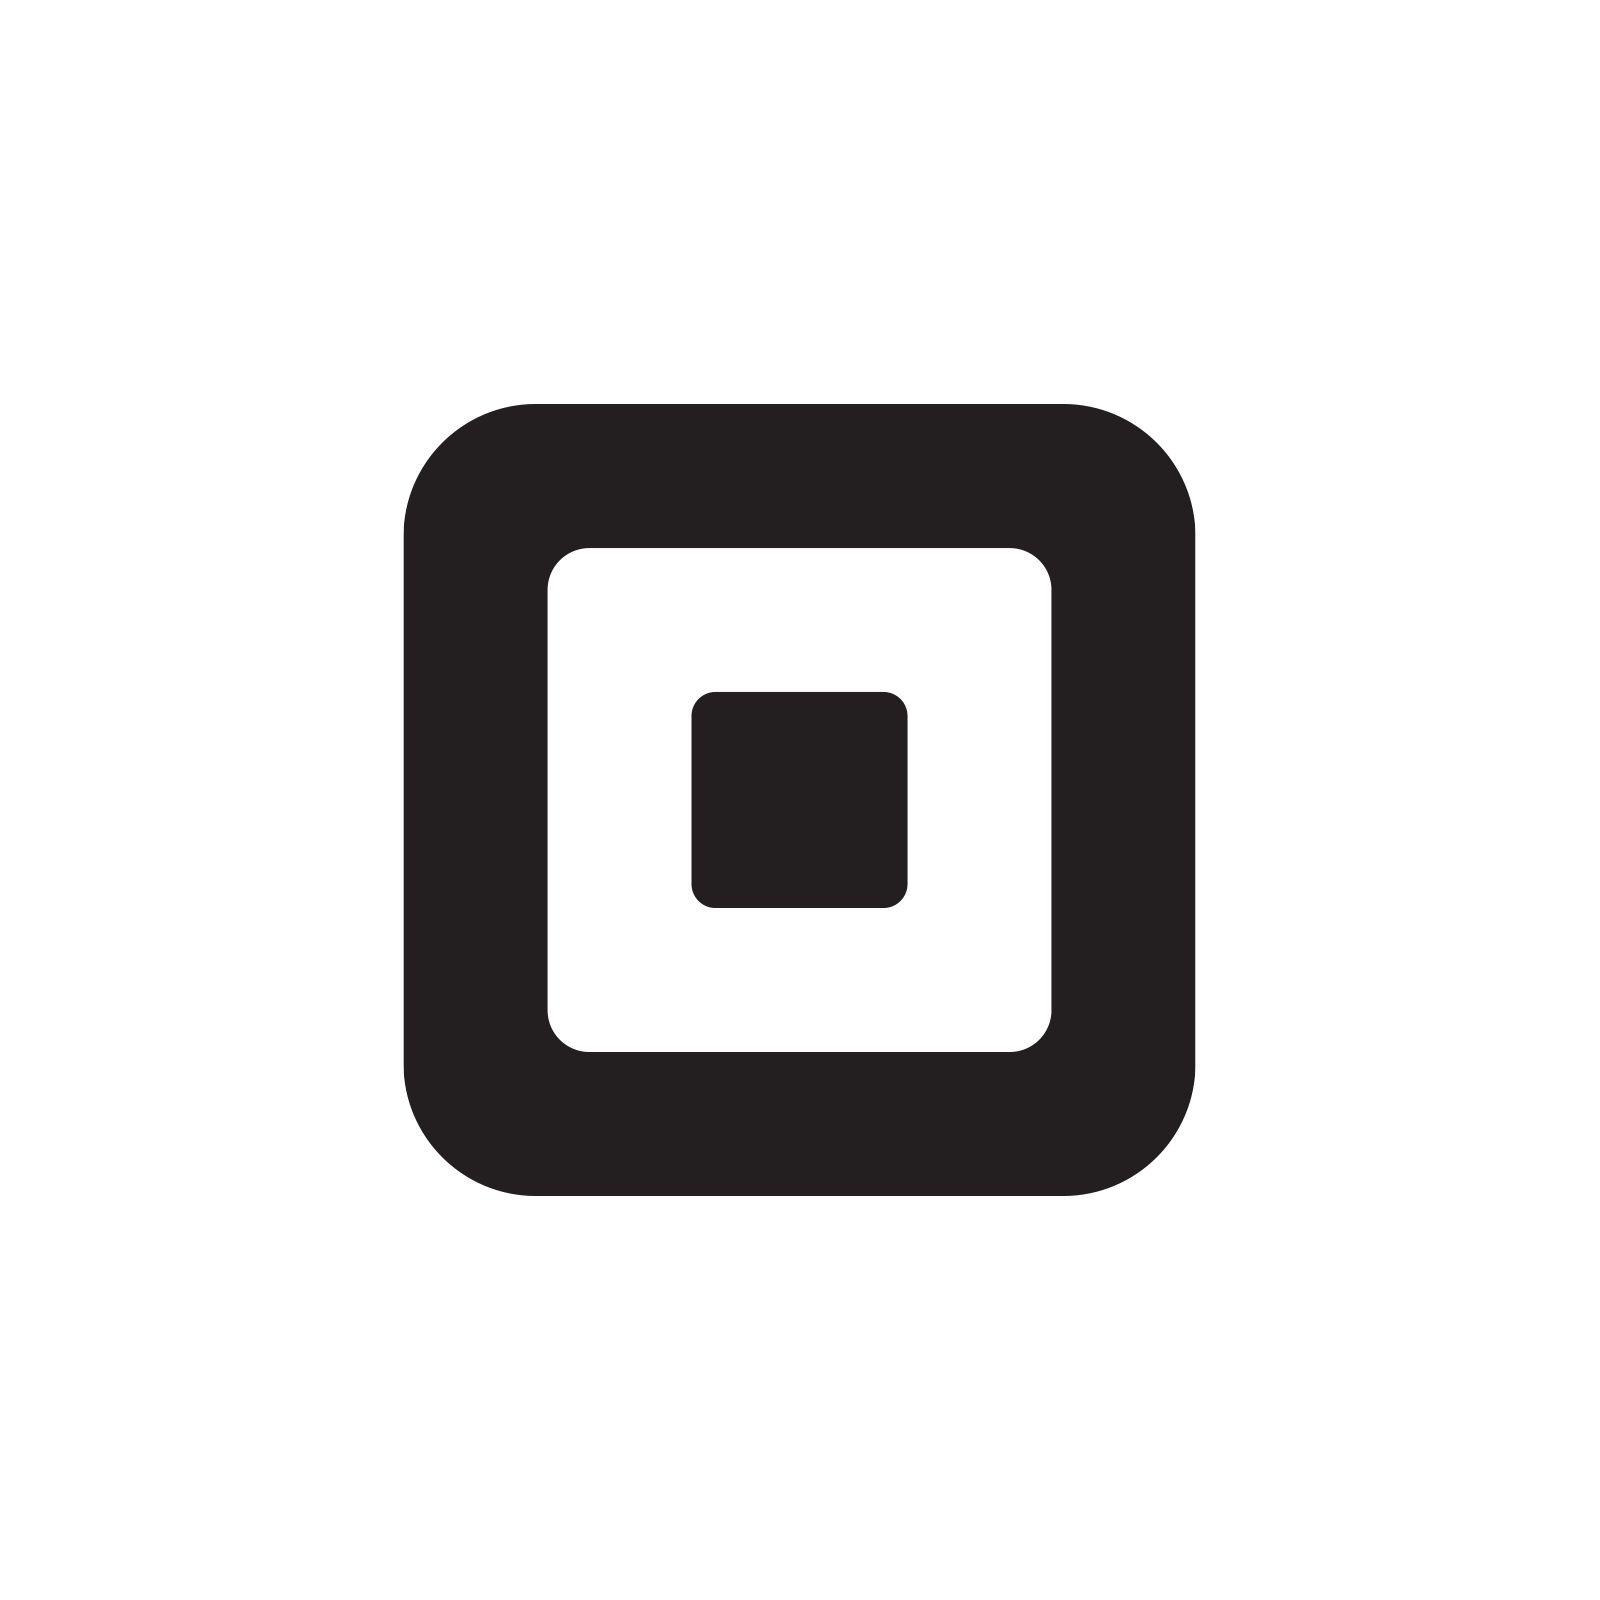 Open Square Logo - File:Square, Inc - Square Logo.jpg - Wikimedia Commons